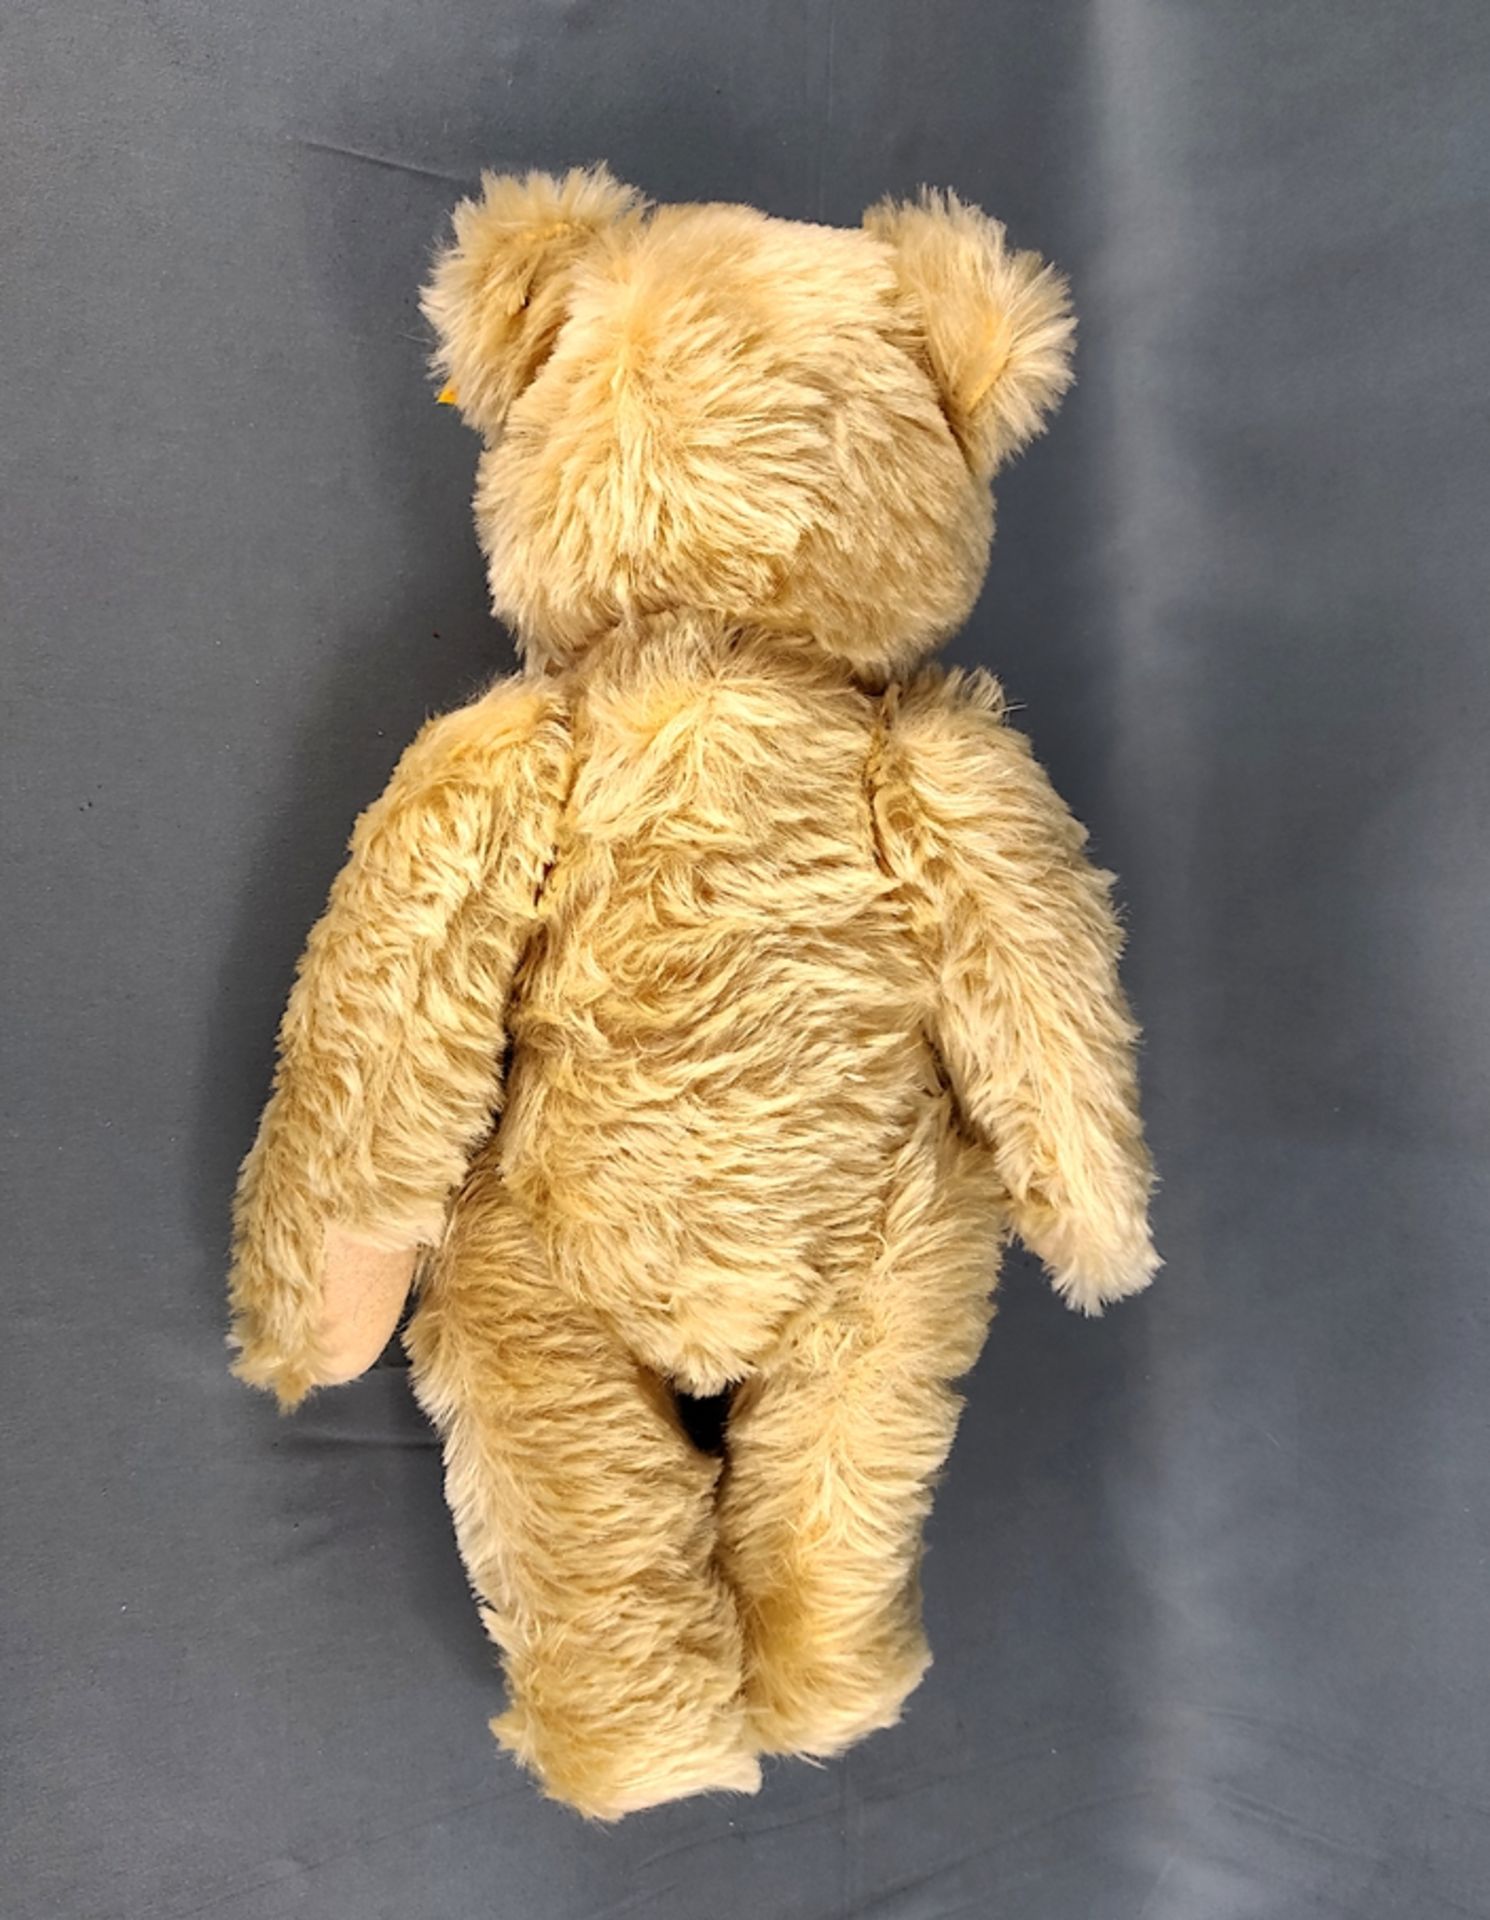 Steiff replica teddy bear, 010408, beige mohair, 1991-1995, tipping voice, height 42cm - Image 2 of 3